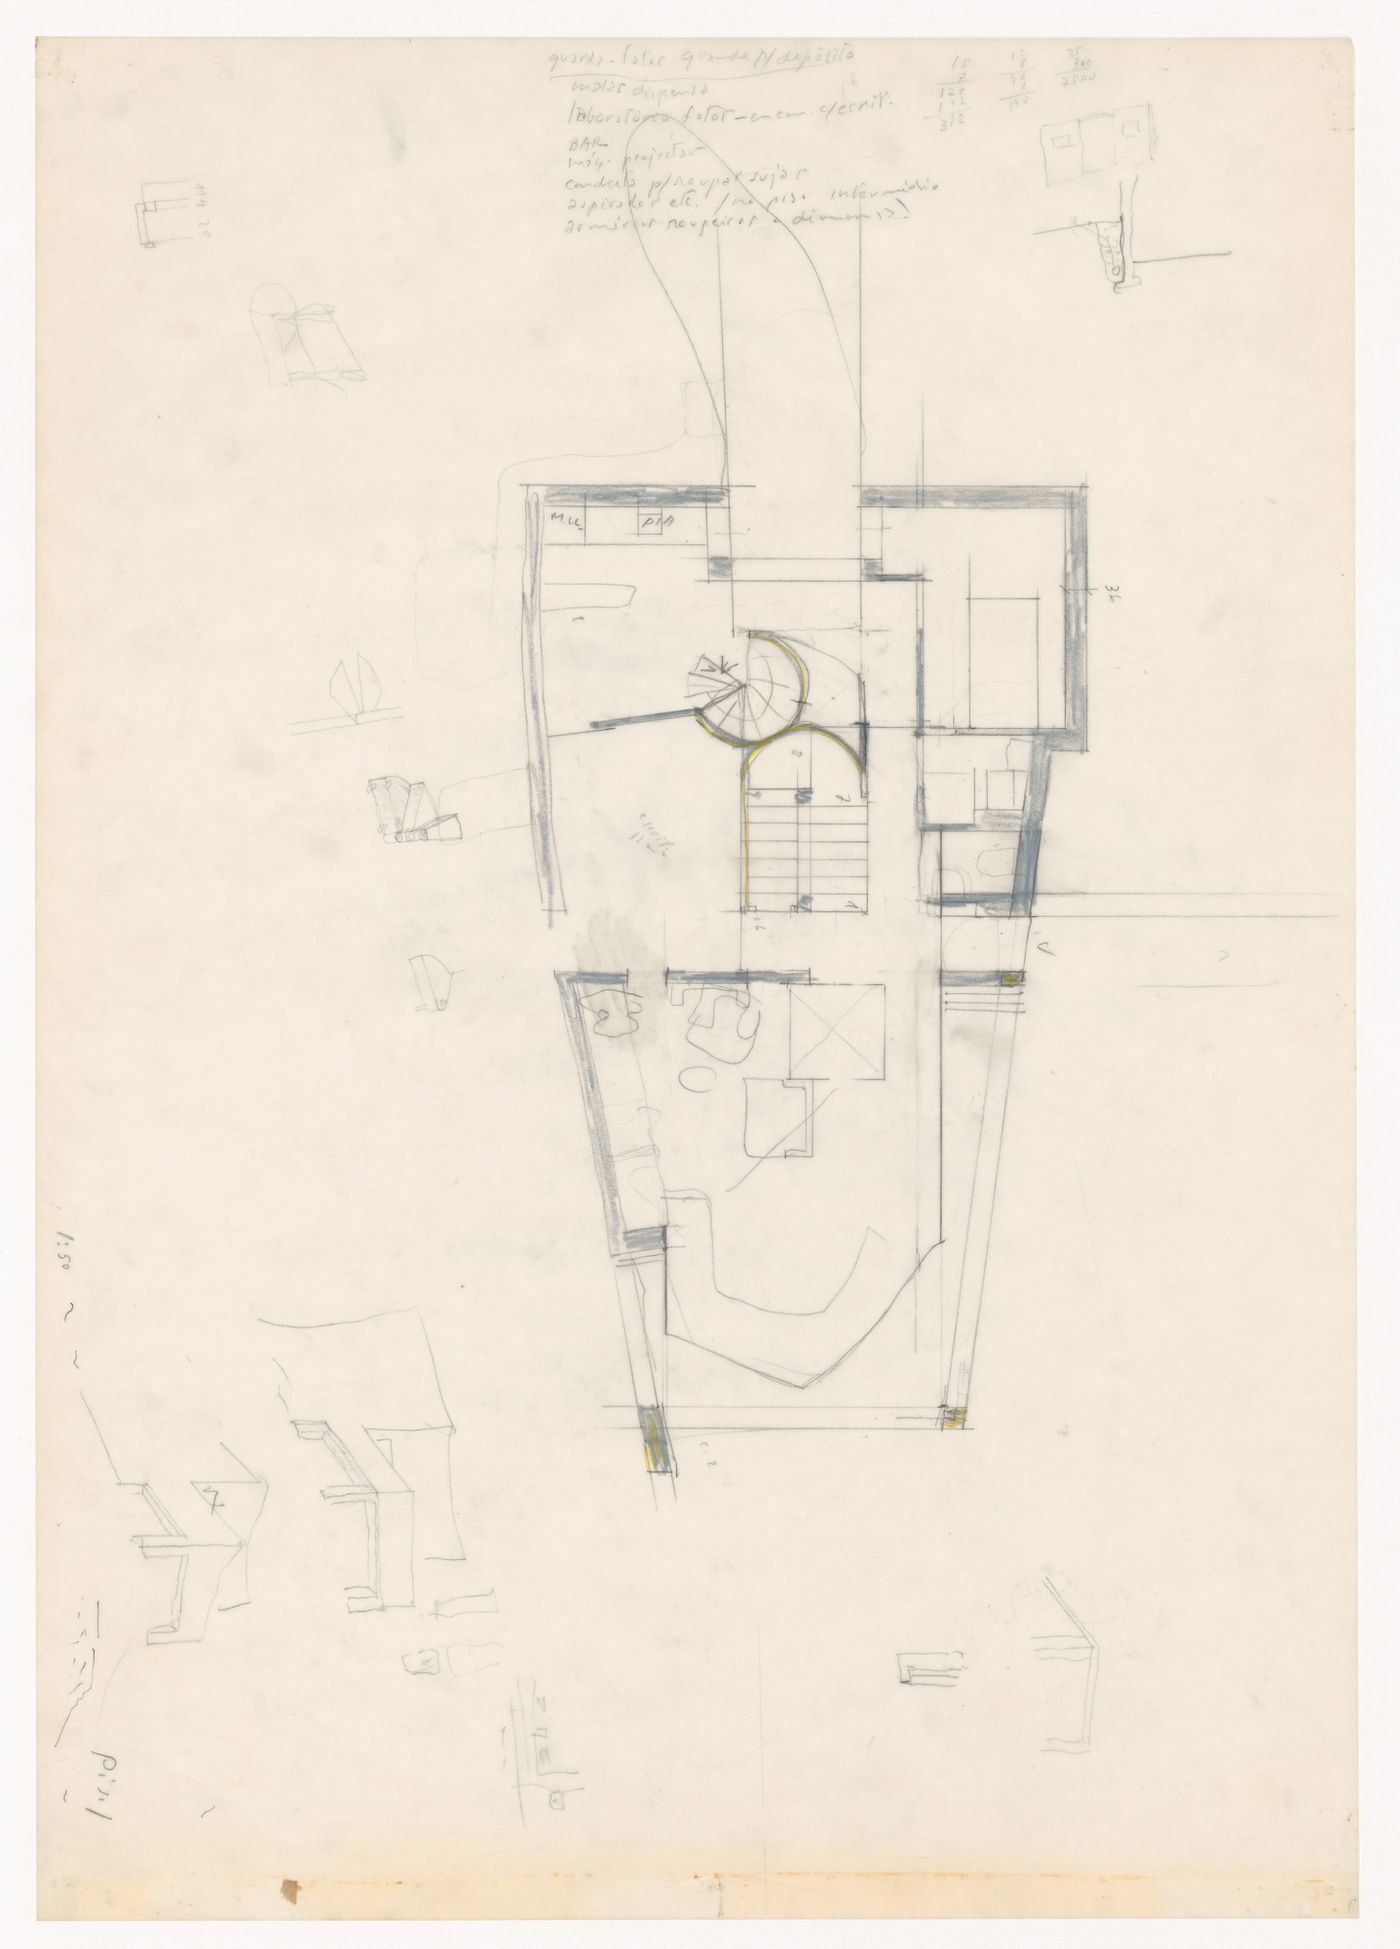 Sketch plan and sketches for Casa Fernando Machado [Fernando Machado house], Porto, Portugal